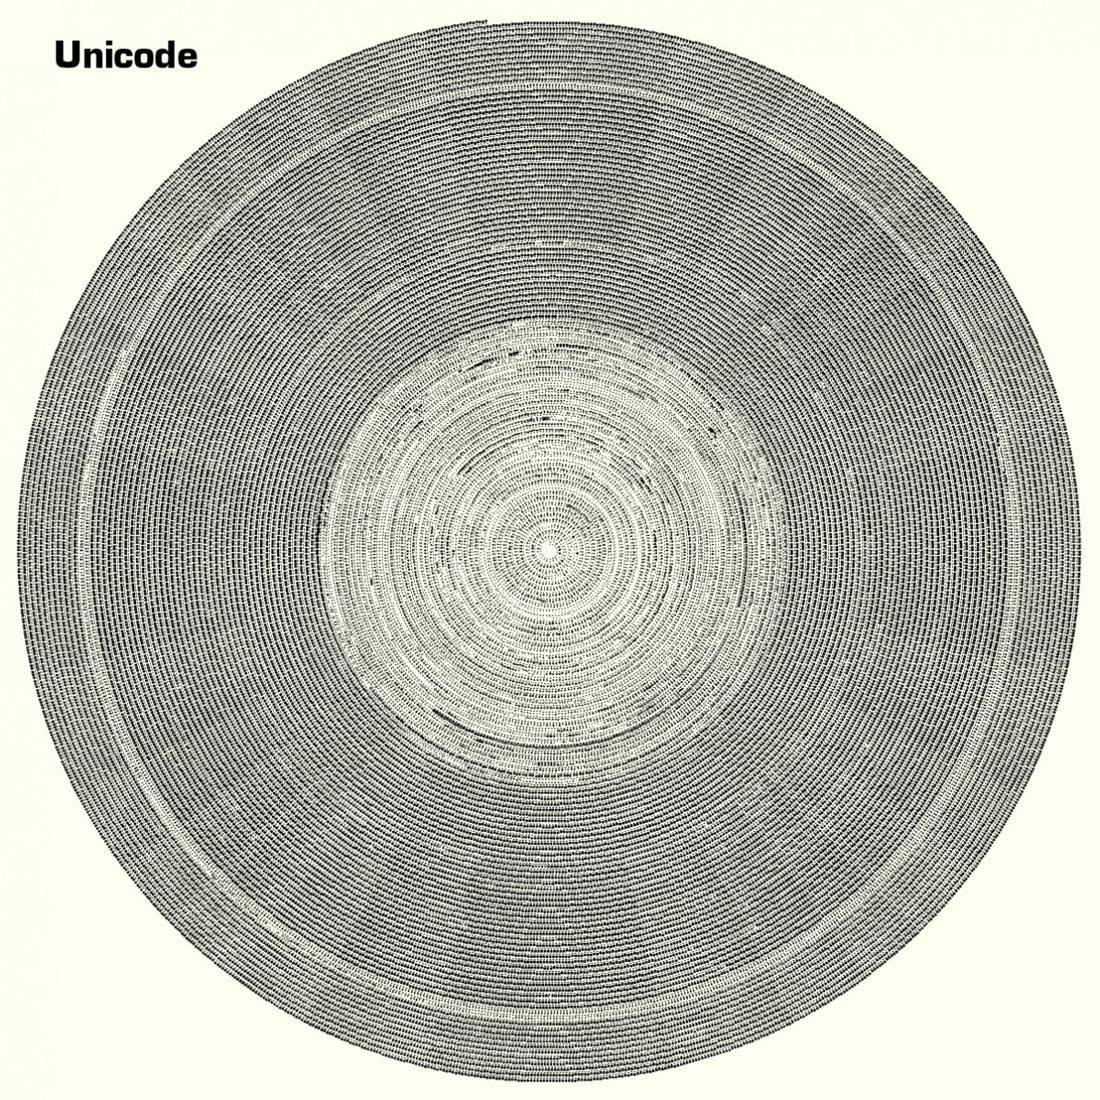 Unicode (U0020 to U+AFF) in a Spiral Typographic Poster